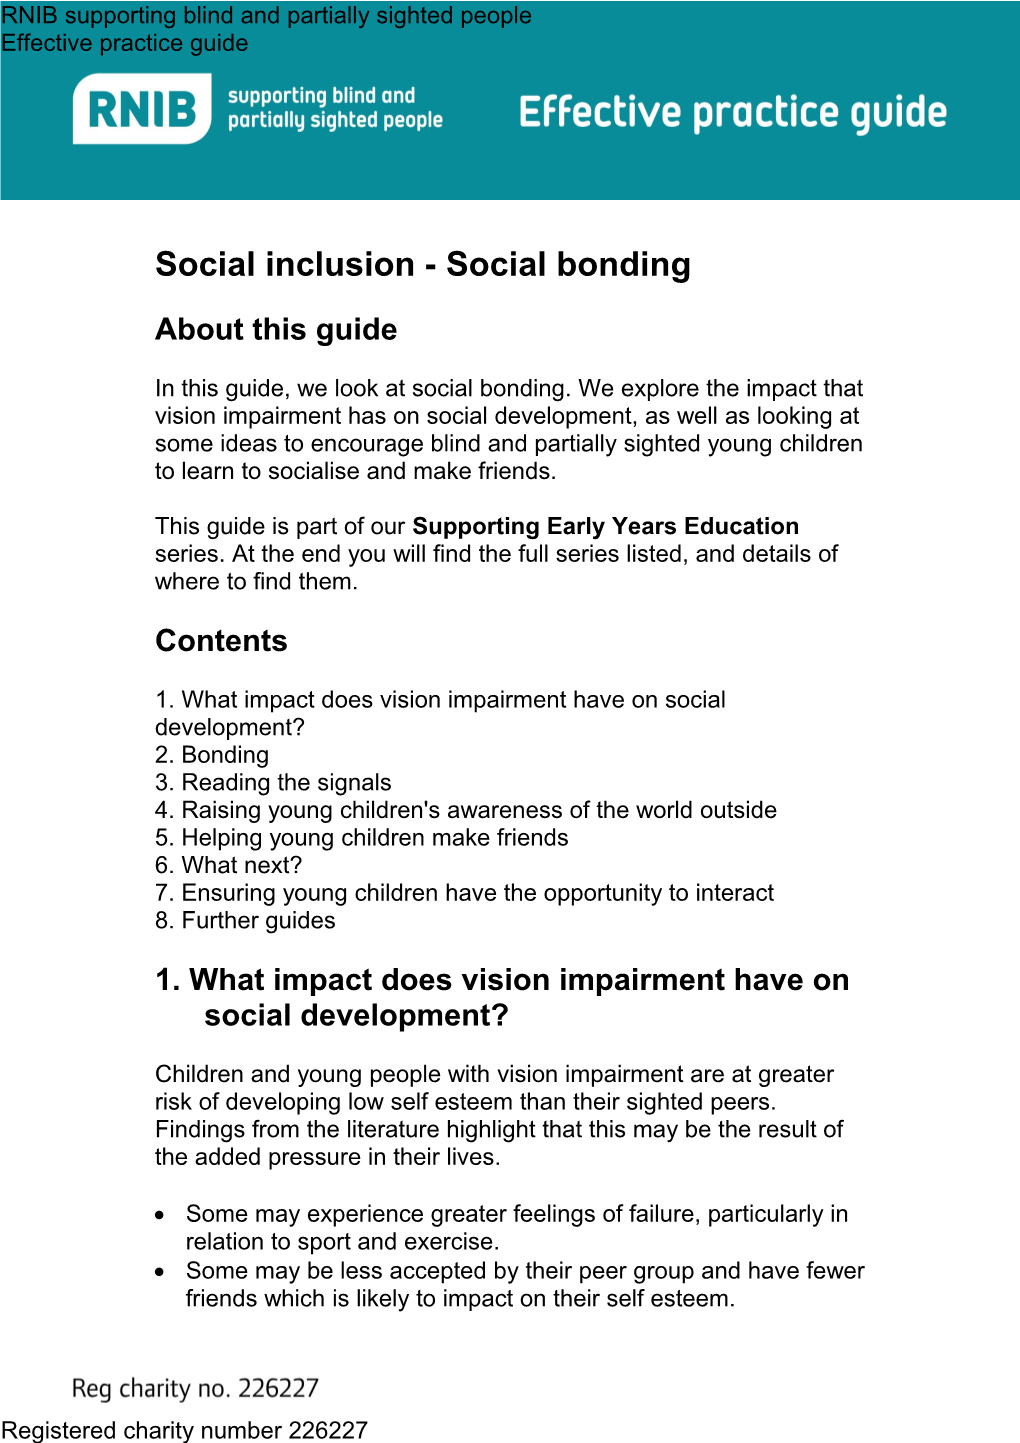 Social Inclusion Social Bonding